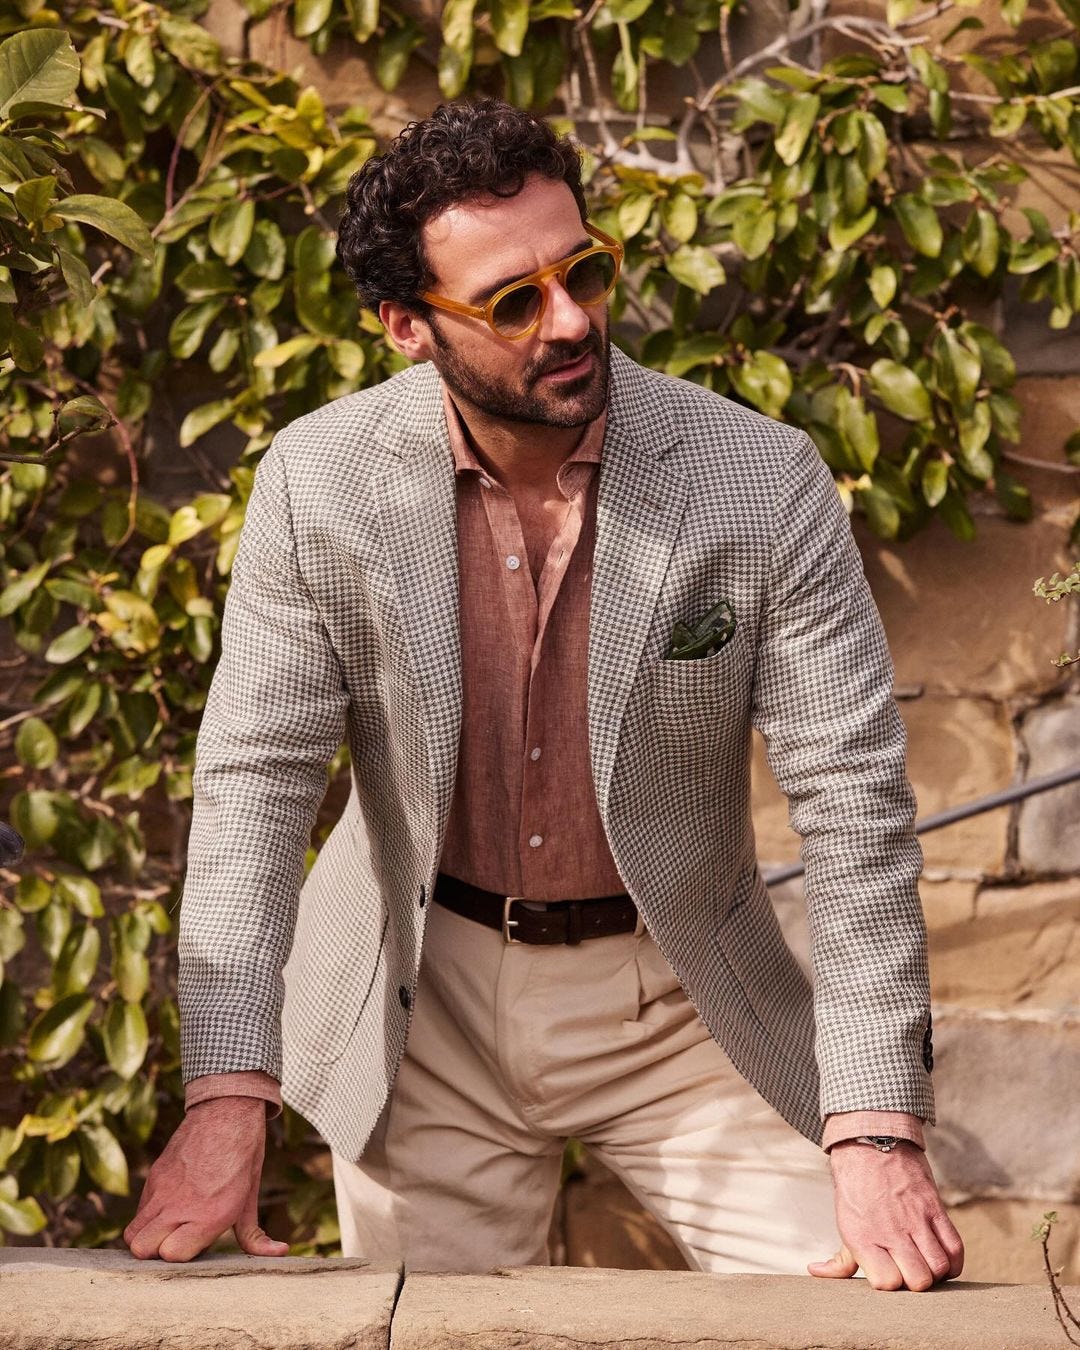 Italian summer men's clothing inspiration, man wearing light blazer, linen shirt and tan pants